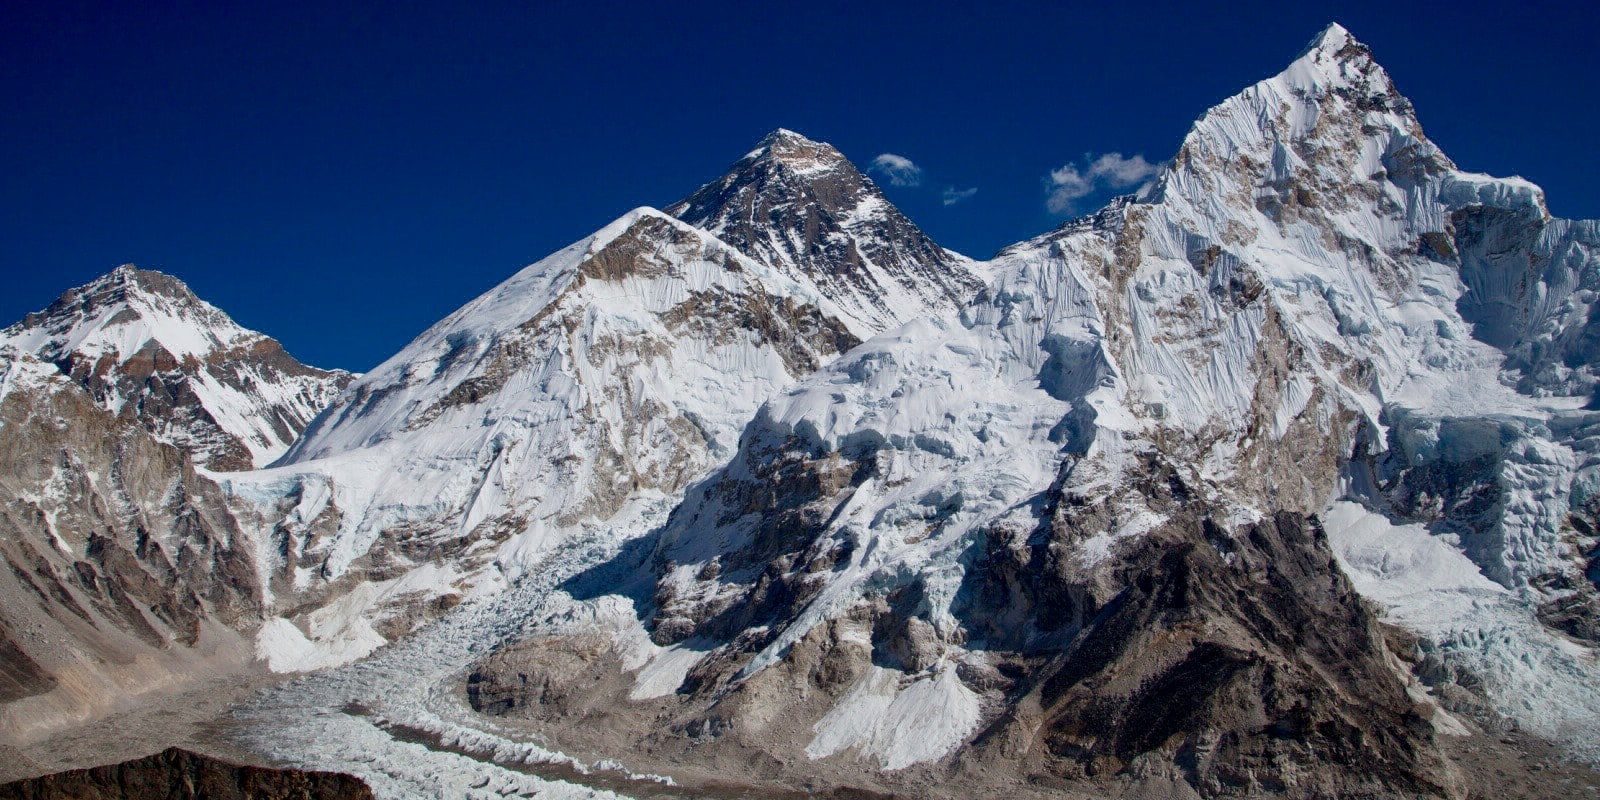 Tag 11: Gipfeltour zum Kala Patthar (5.550m)